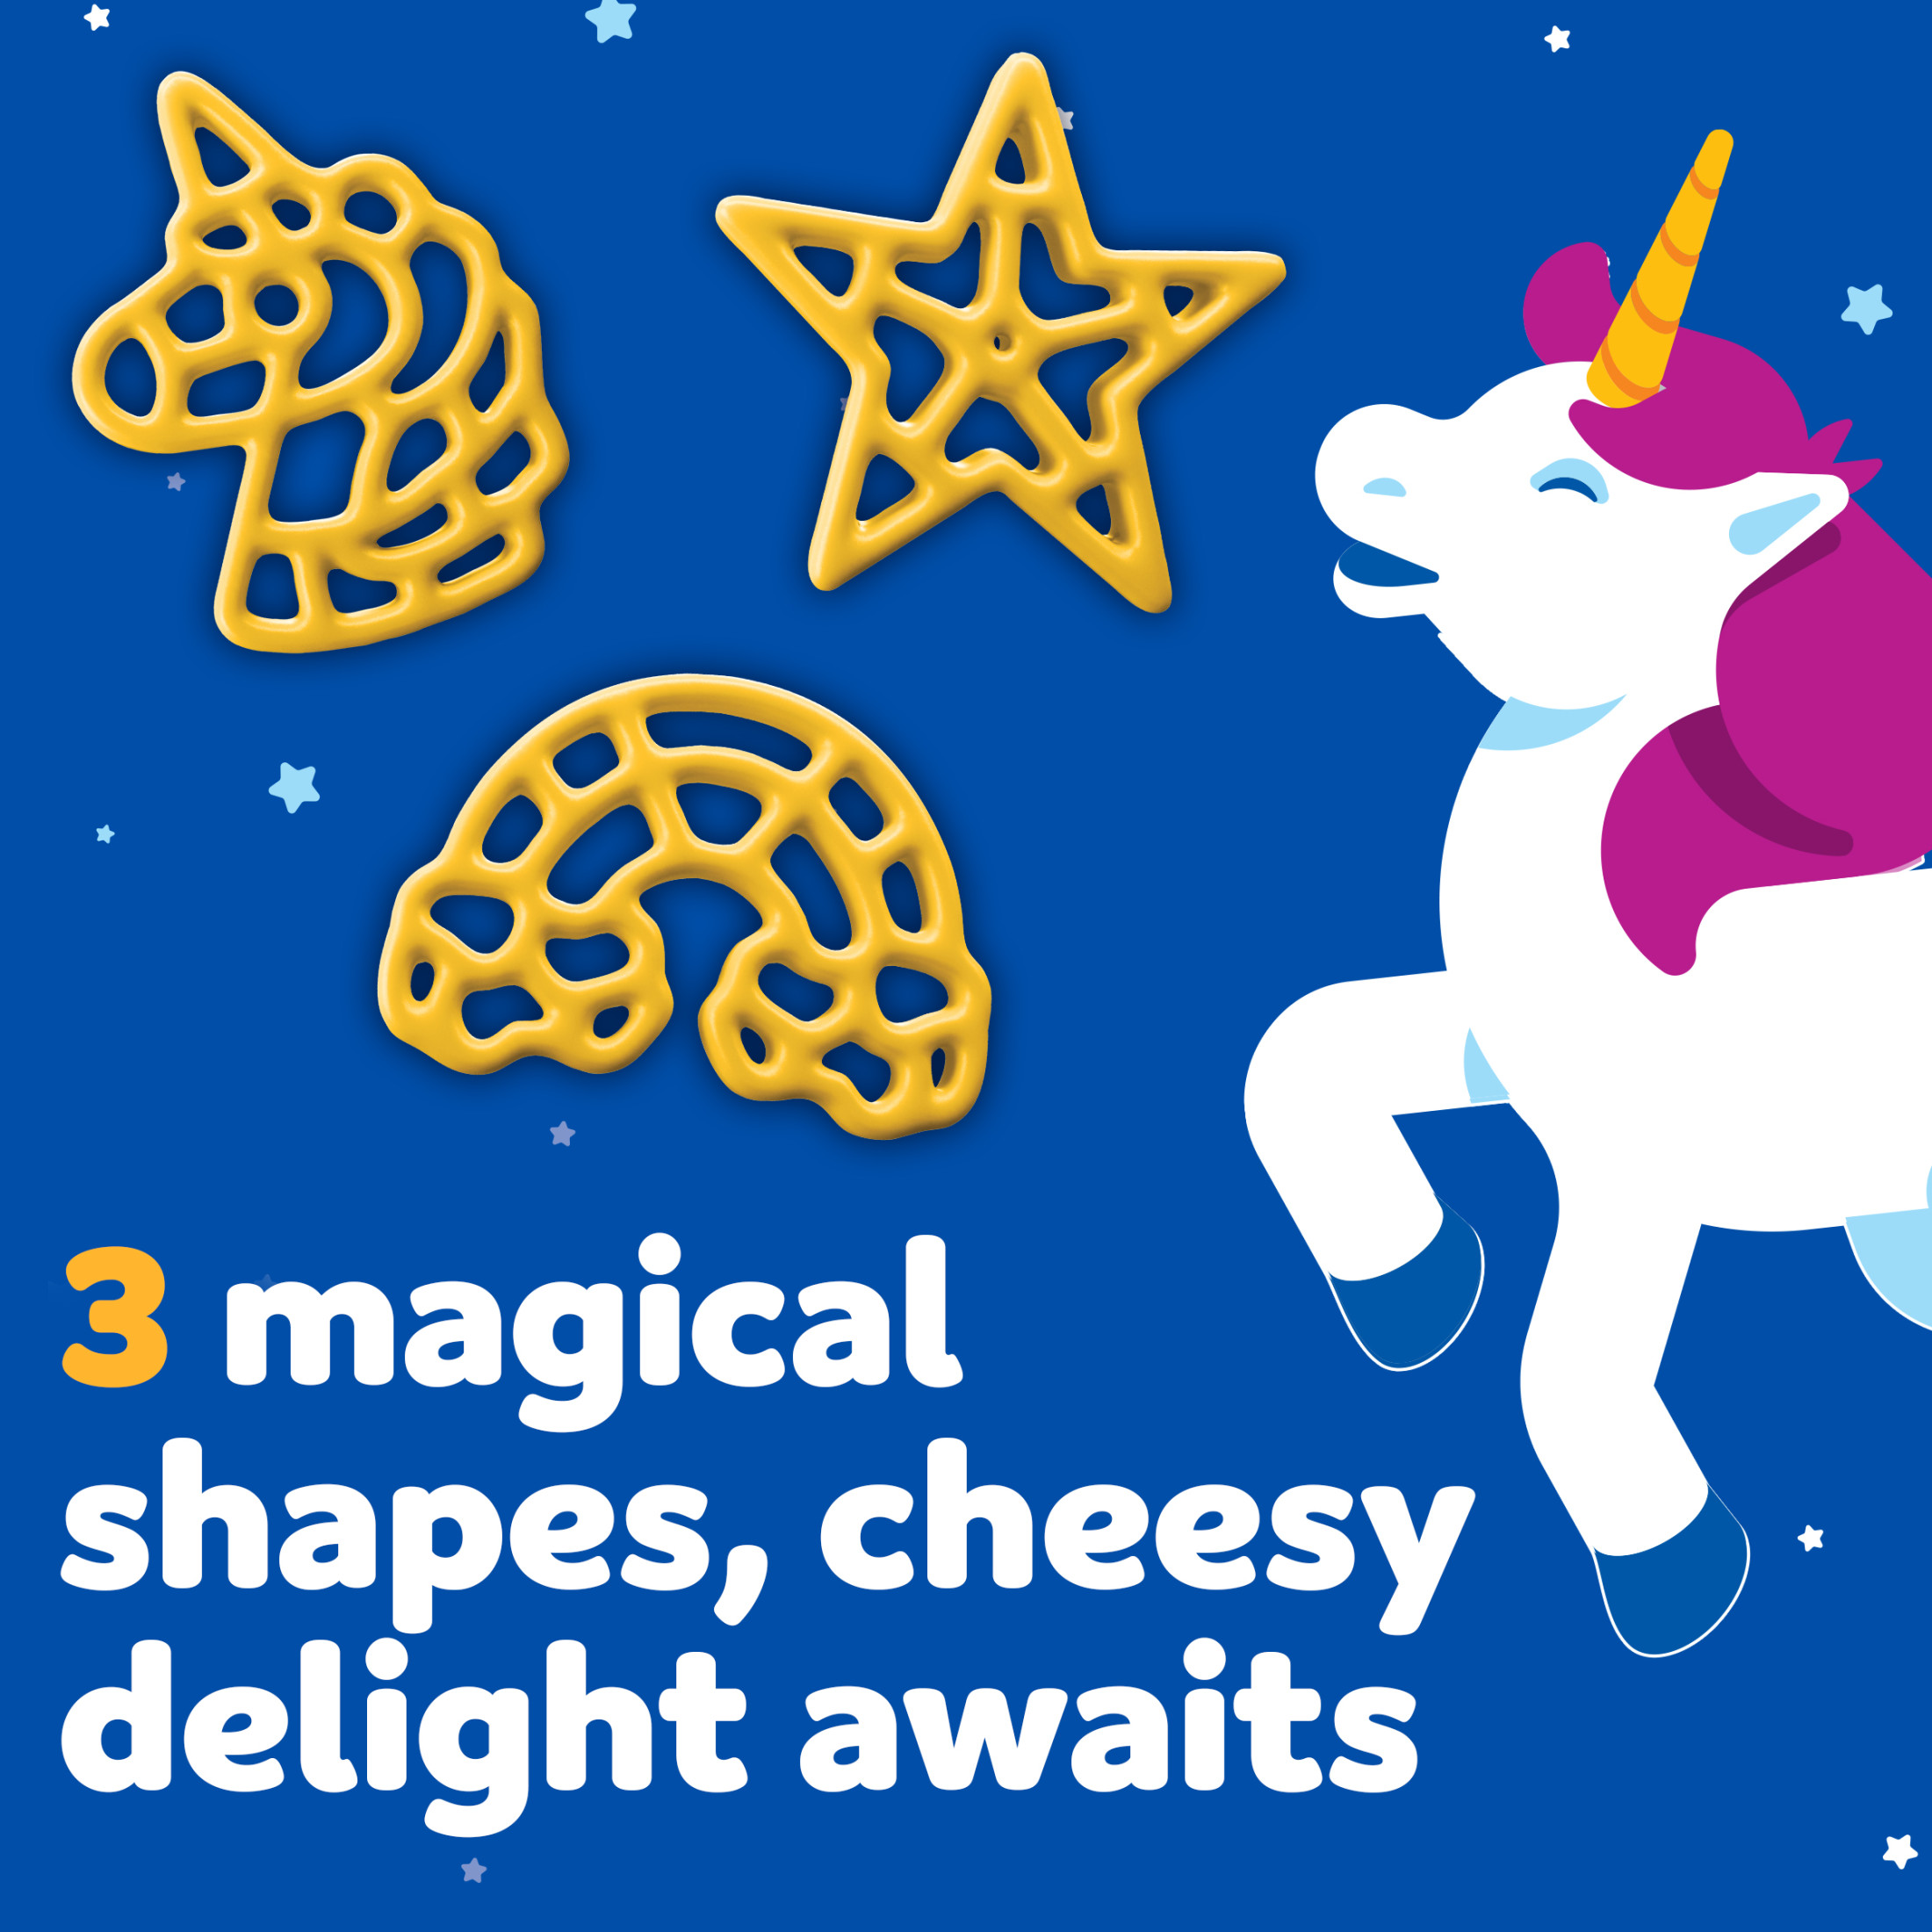 Kraft Mac N Cheese Macaroni and Cheese Dinner with Unicorn Pasta Shapes, 5.5 oz Box - image 5 of 15